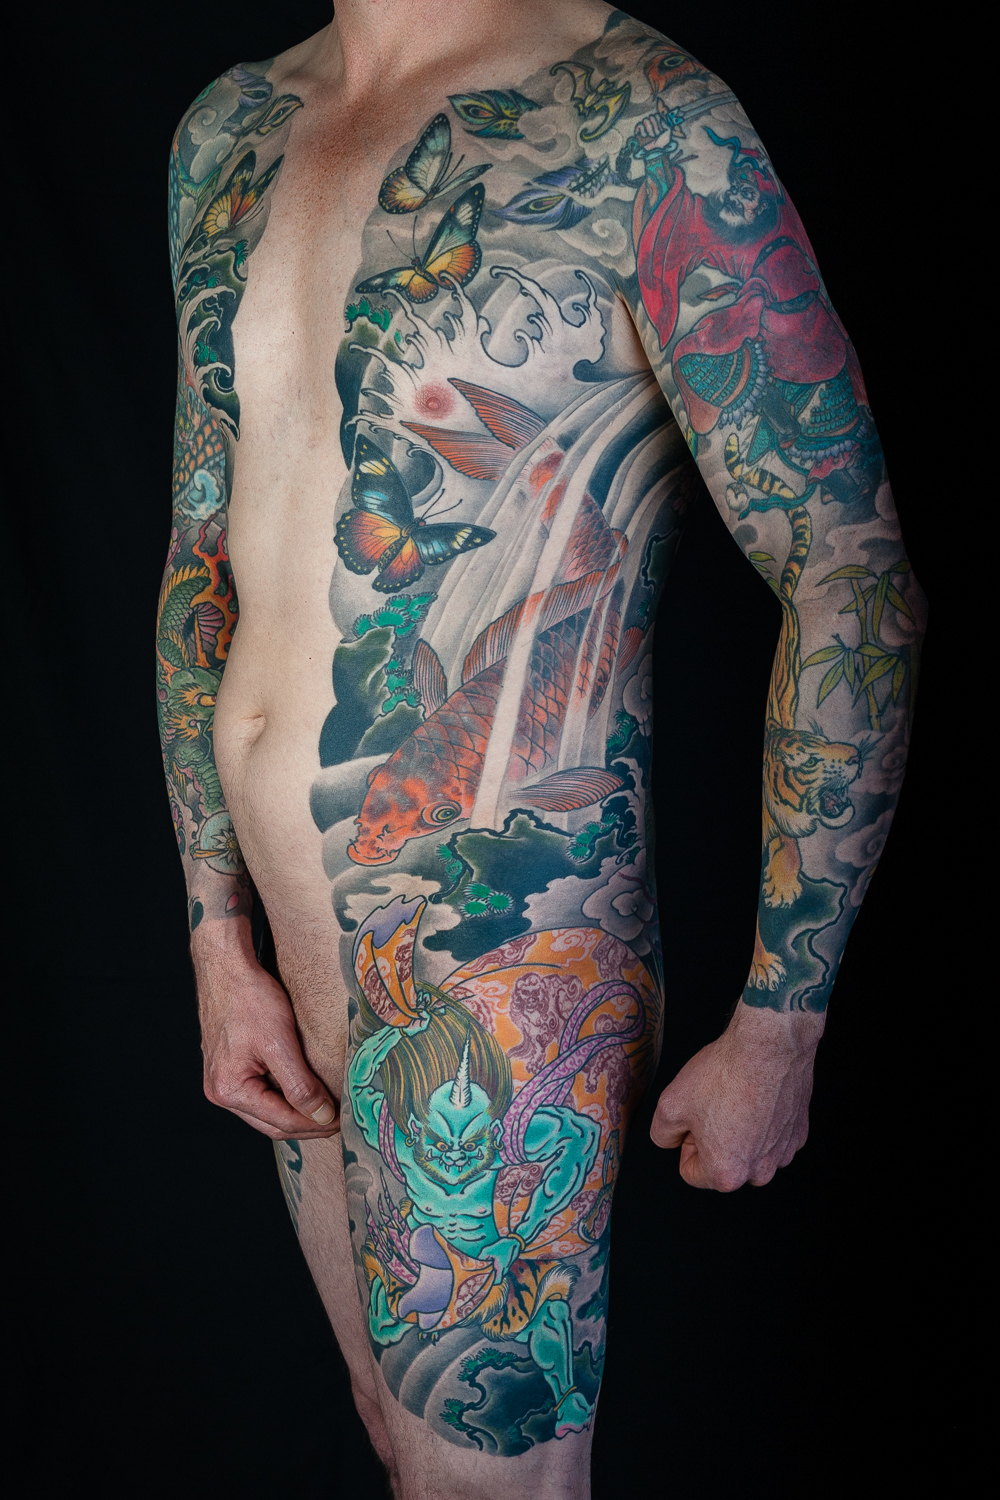 Louis on deck @andreiescu96 . . . #tattoo #tattoos #ink #inked